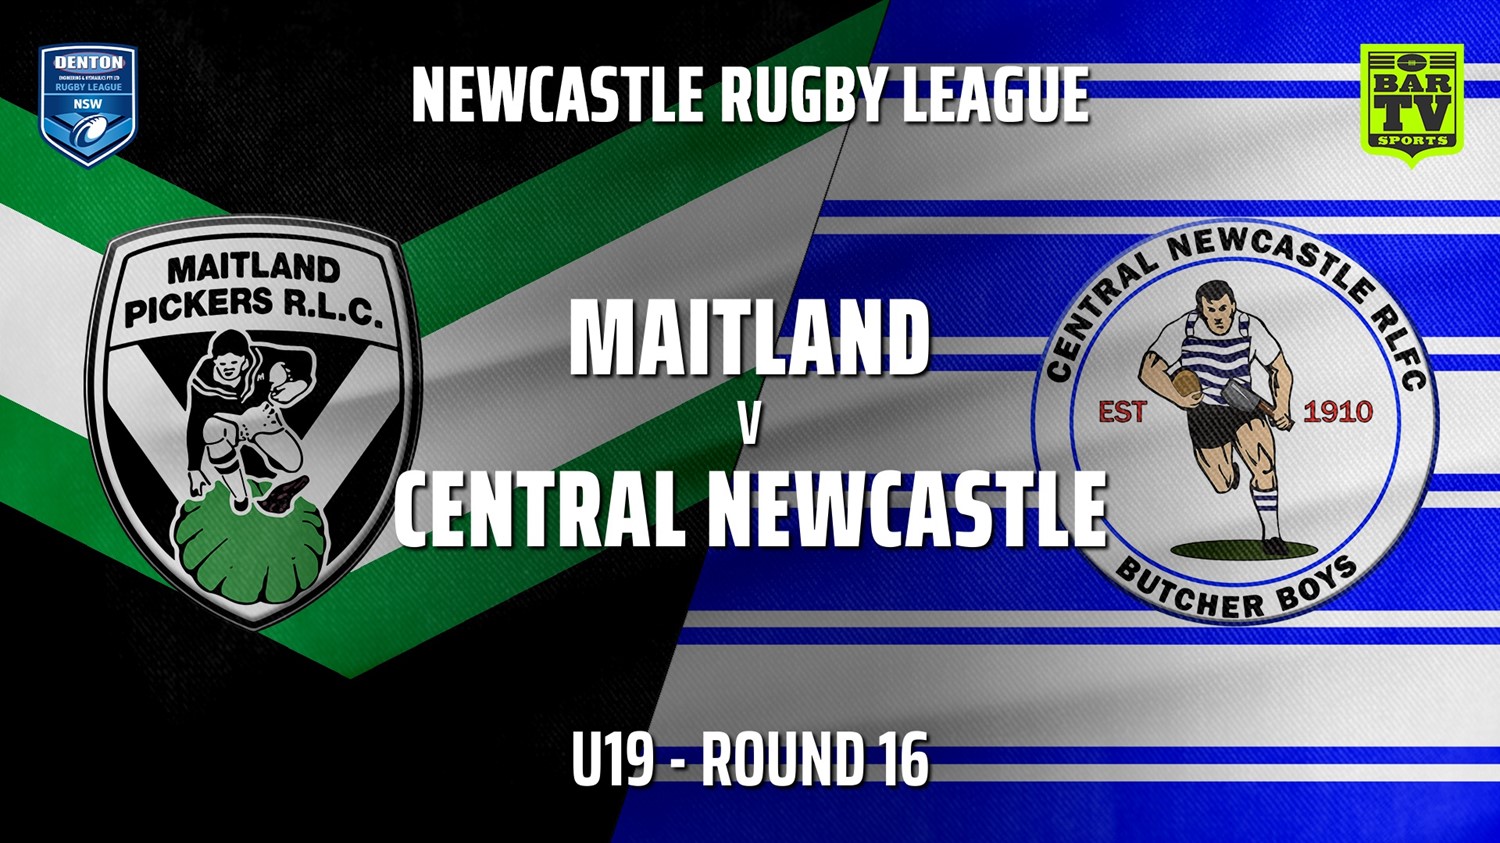 210724-Newcastle Round 16 - U19 - Maitland Pickers v Central Newcastle Slate Image